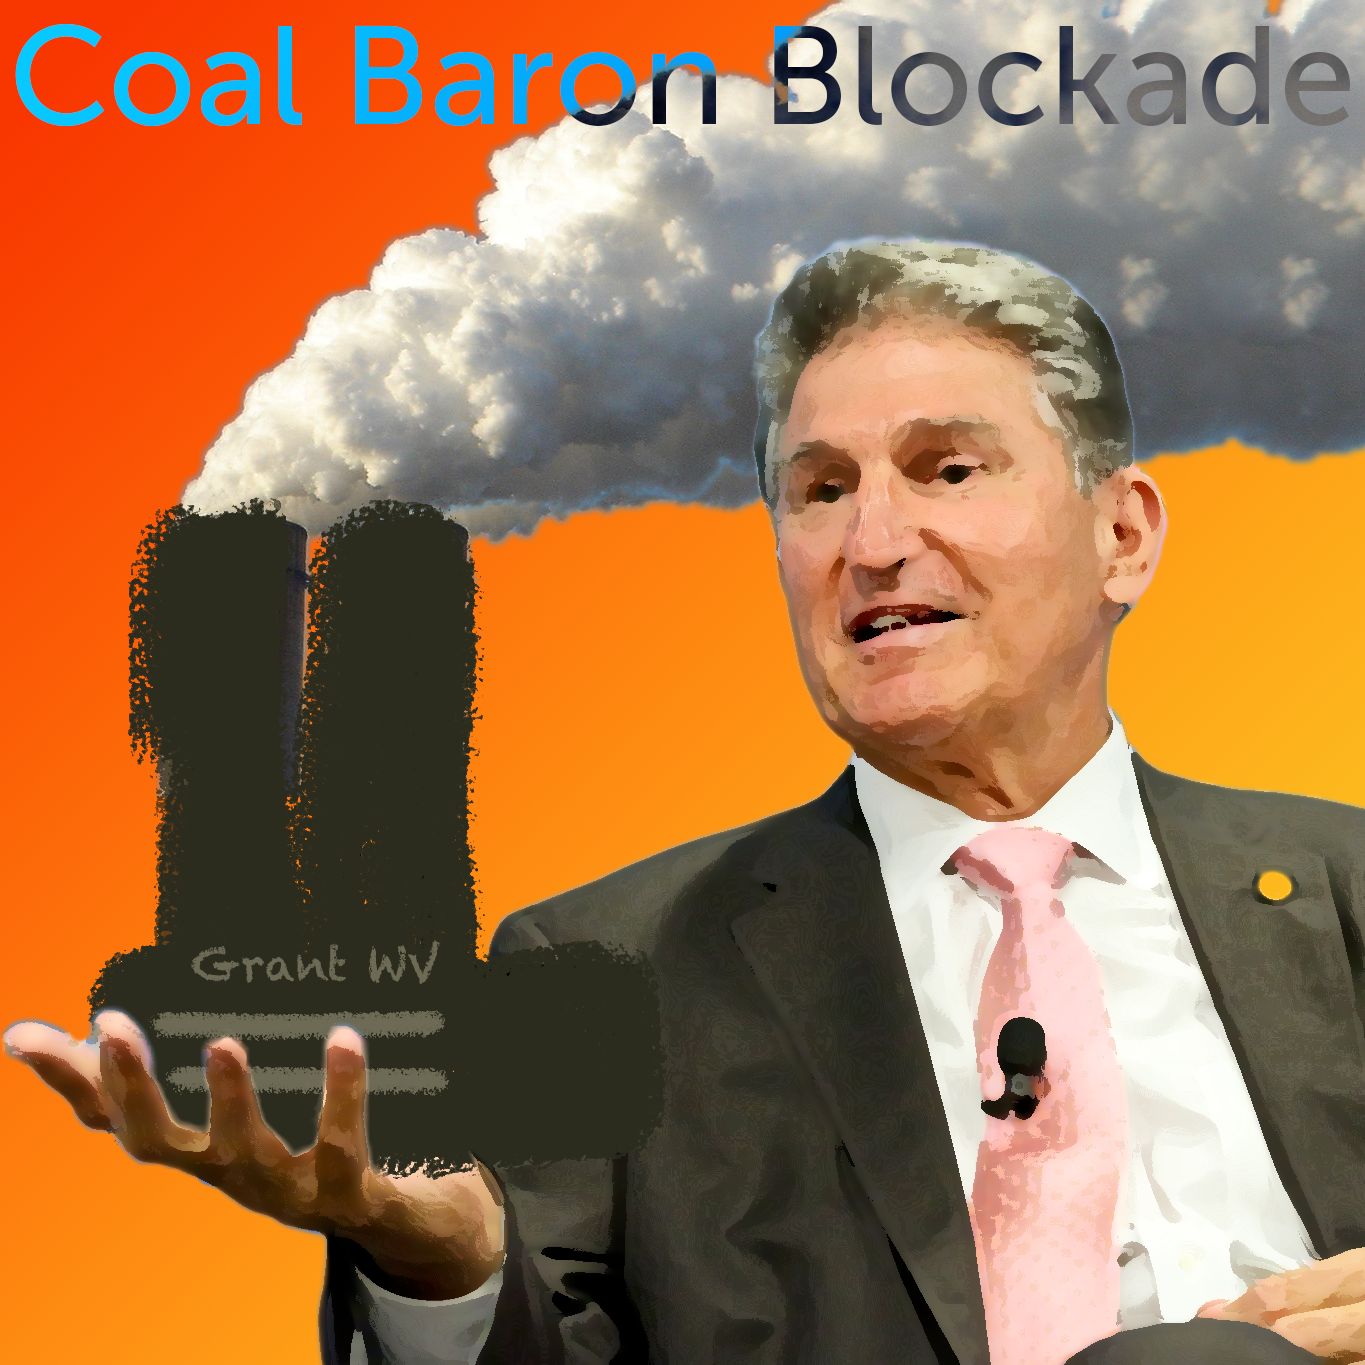 Join the Coal Baron Blockade to stop Manchin